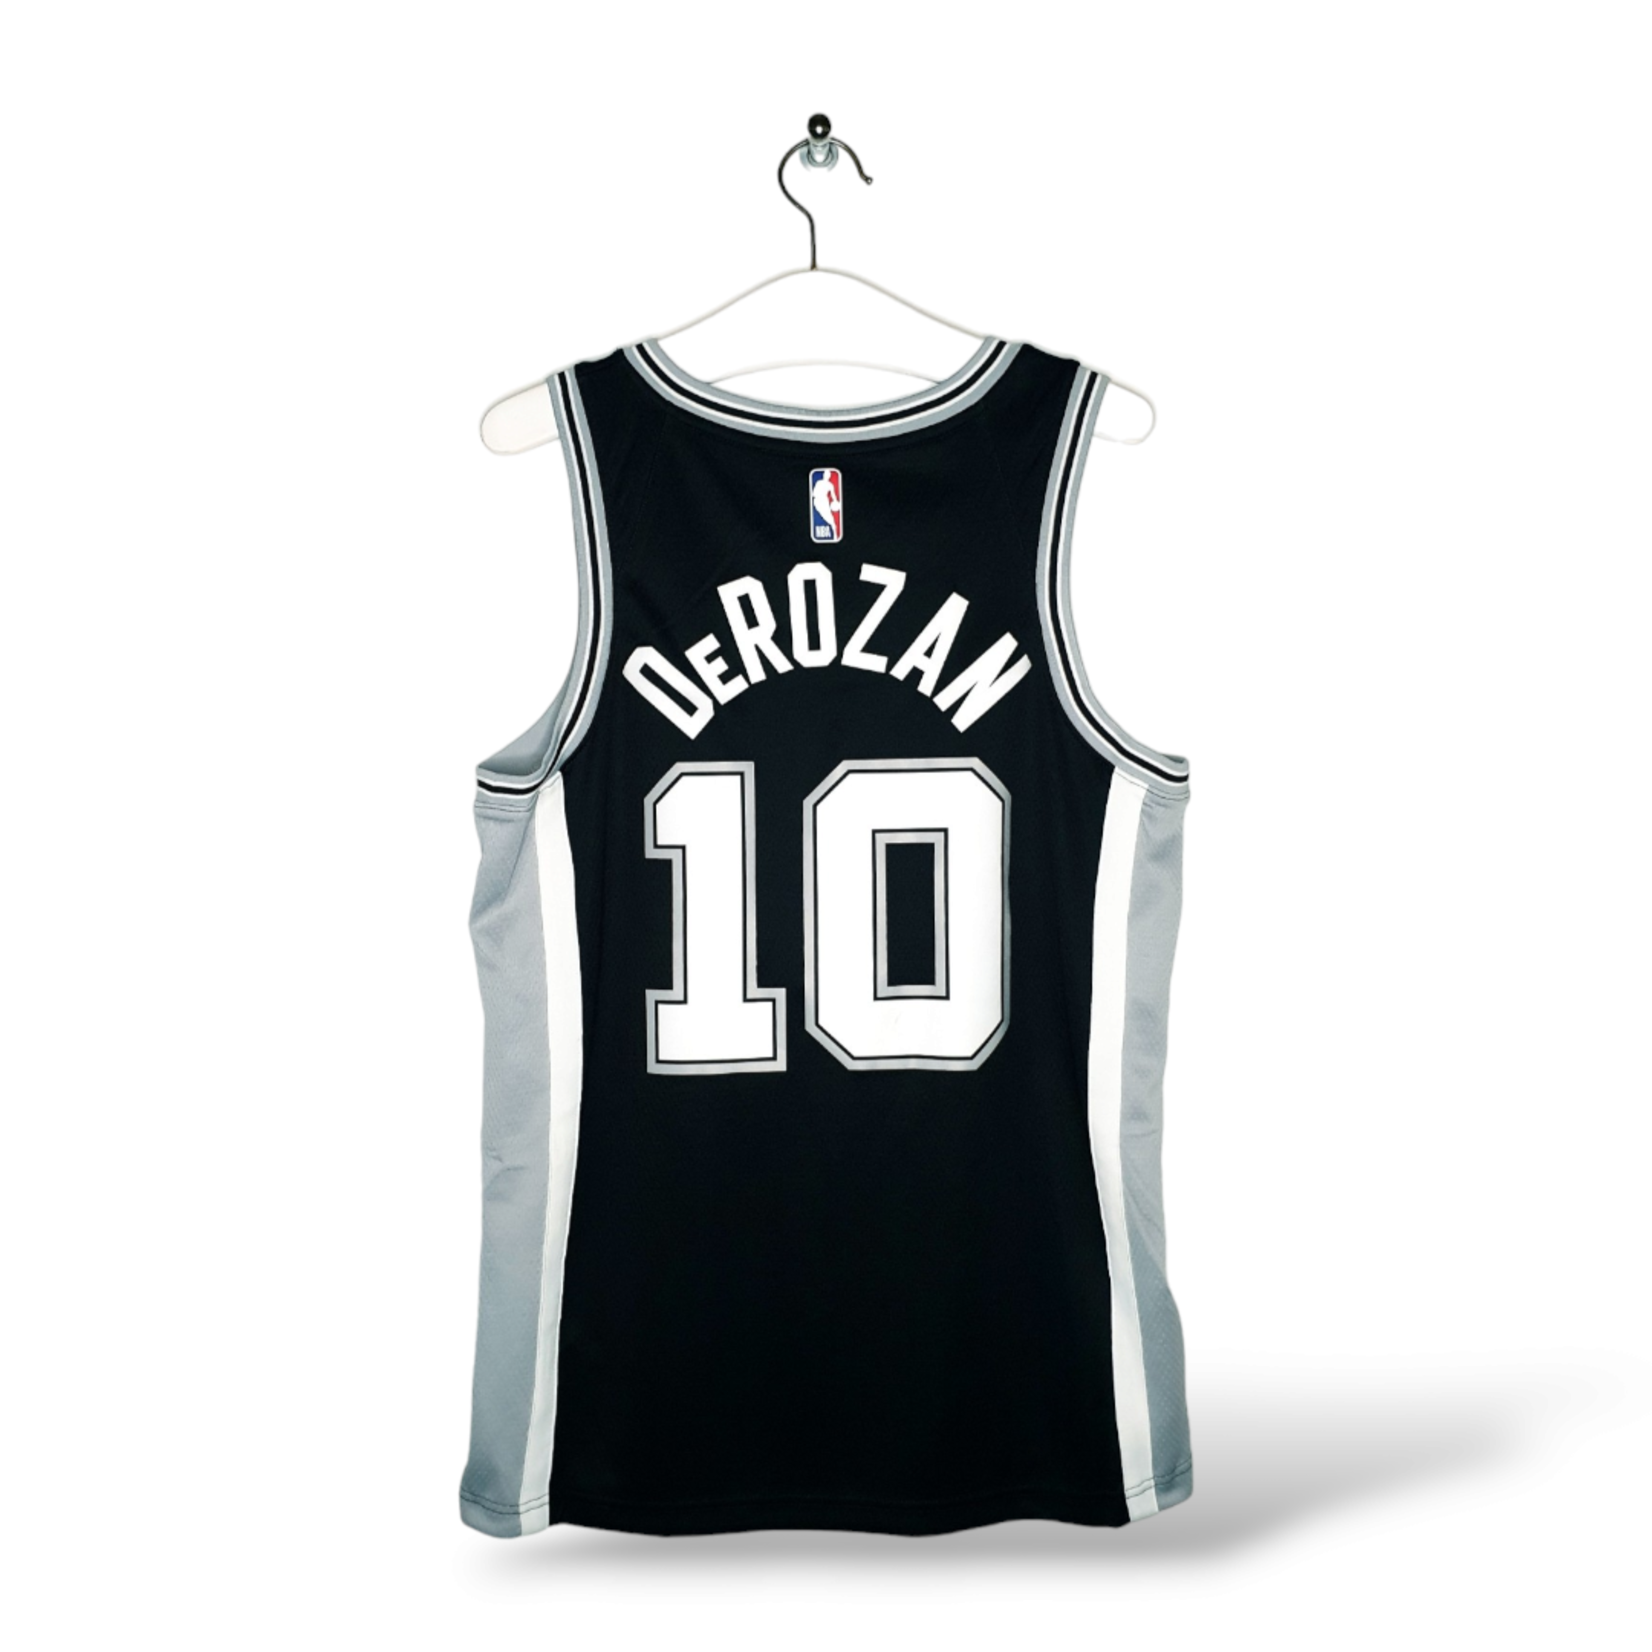 Nike Nike vintage basketbal shirt San Antonio Spurs - DeMar DeRozan